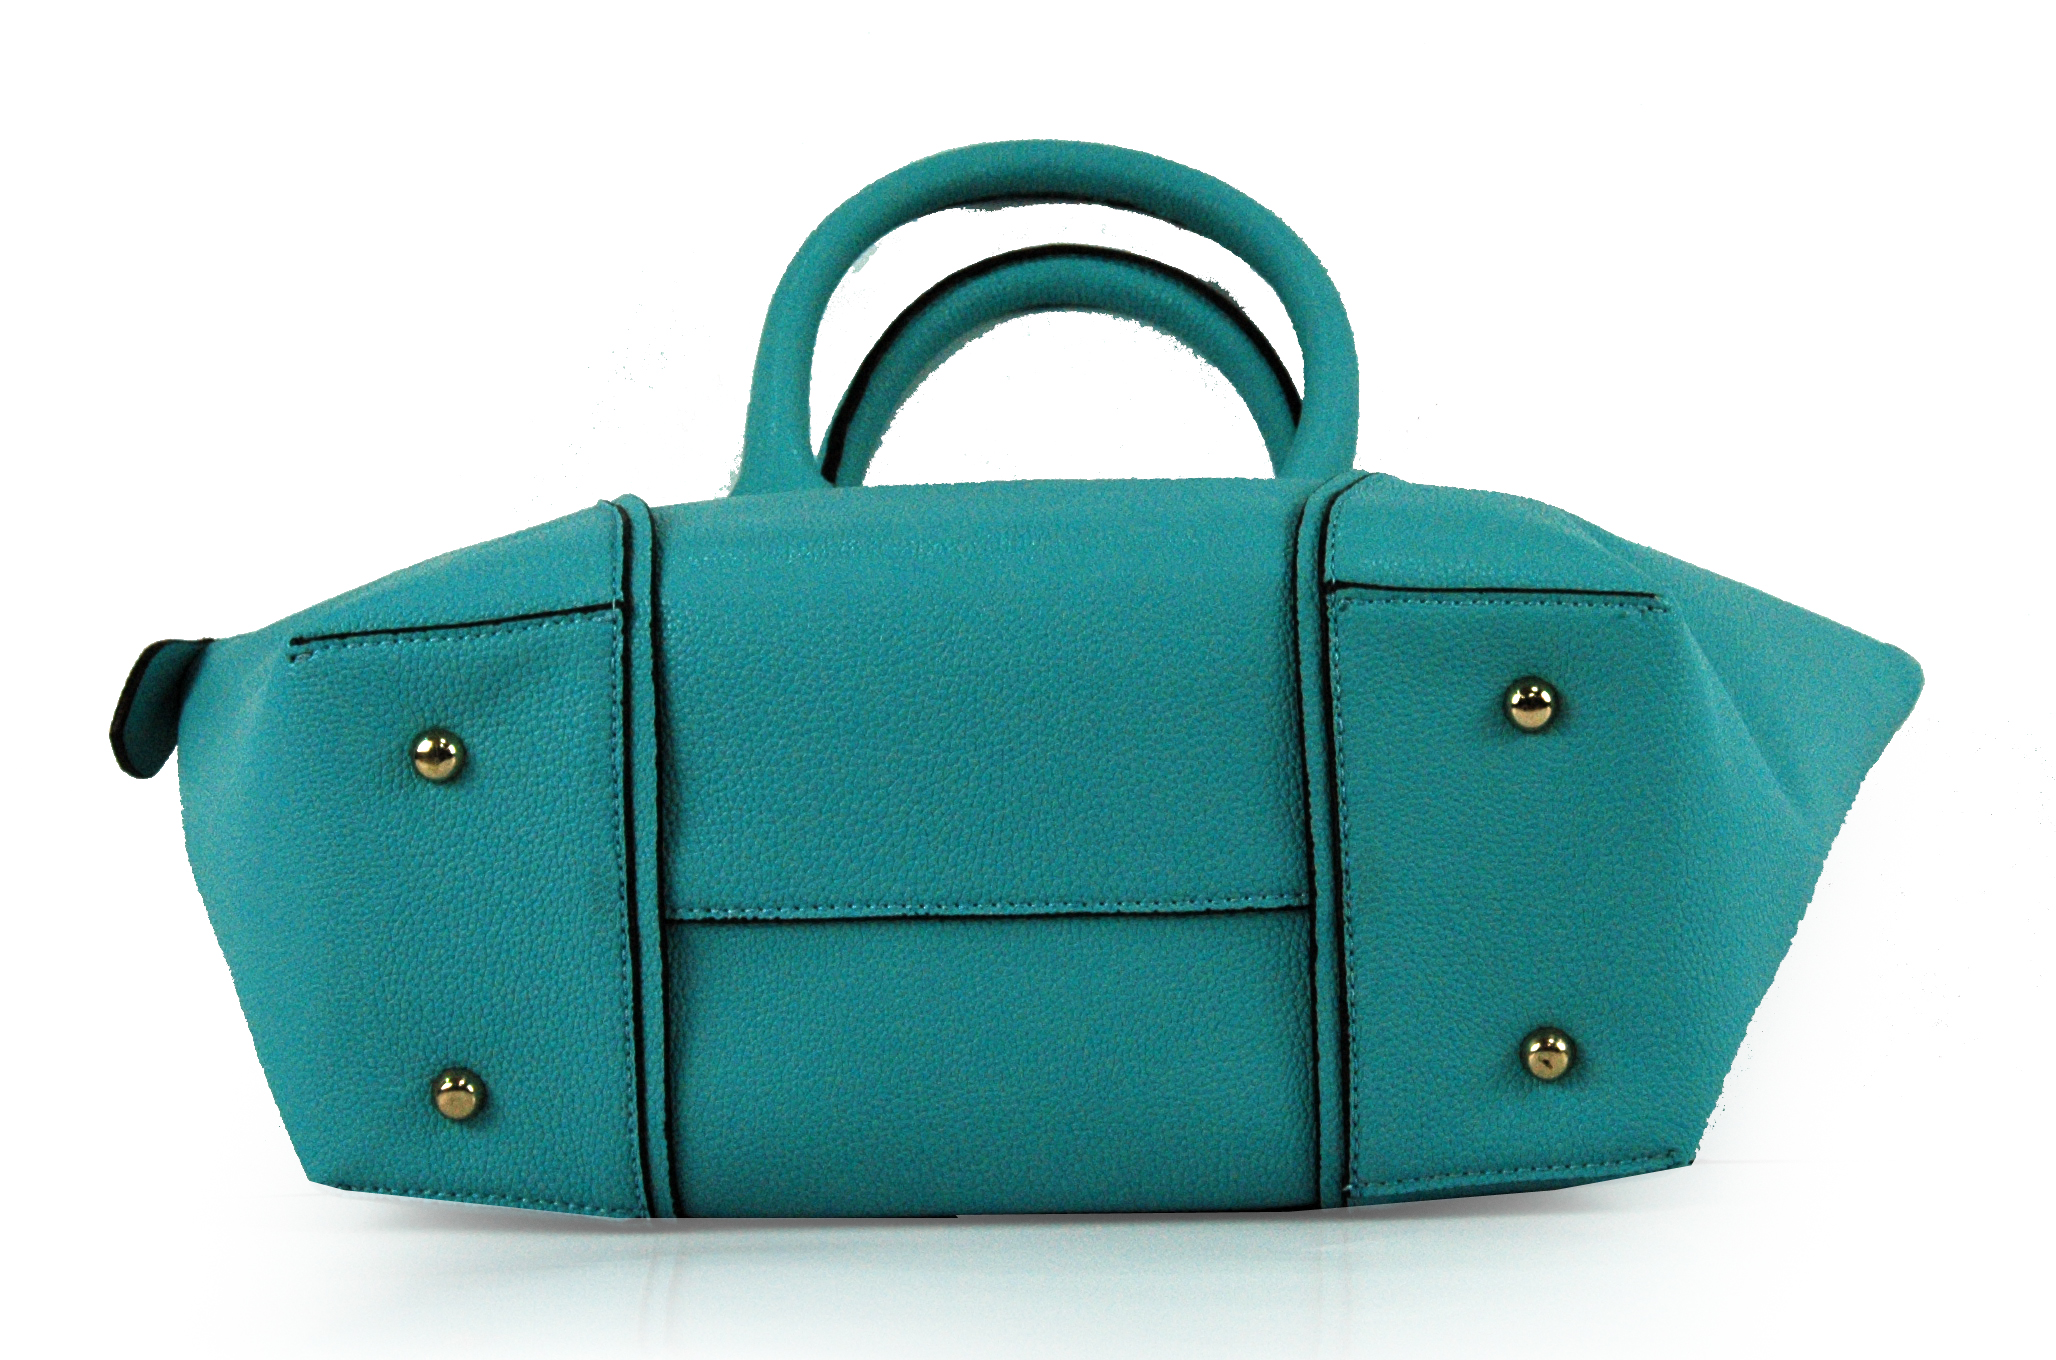 artificial leather PU lady fashion tote handbag